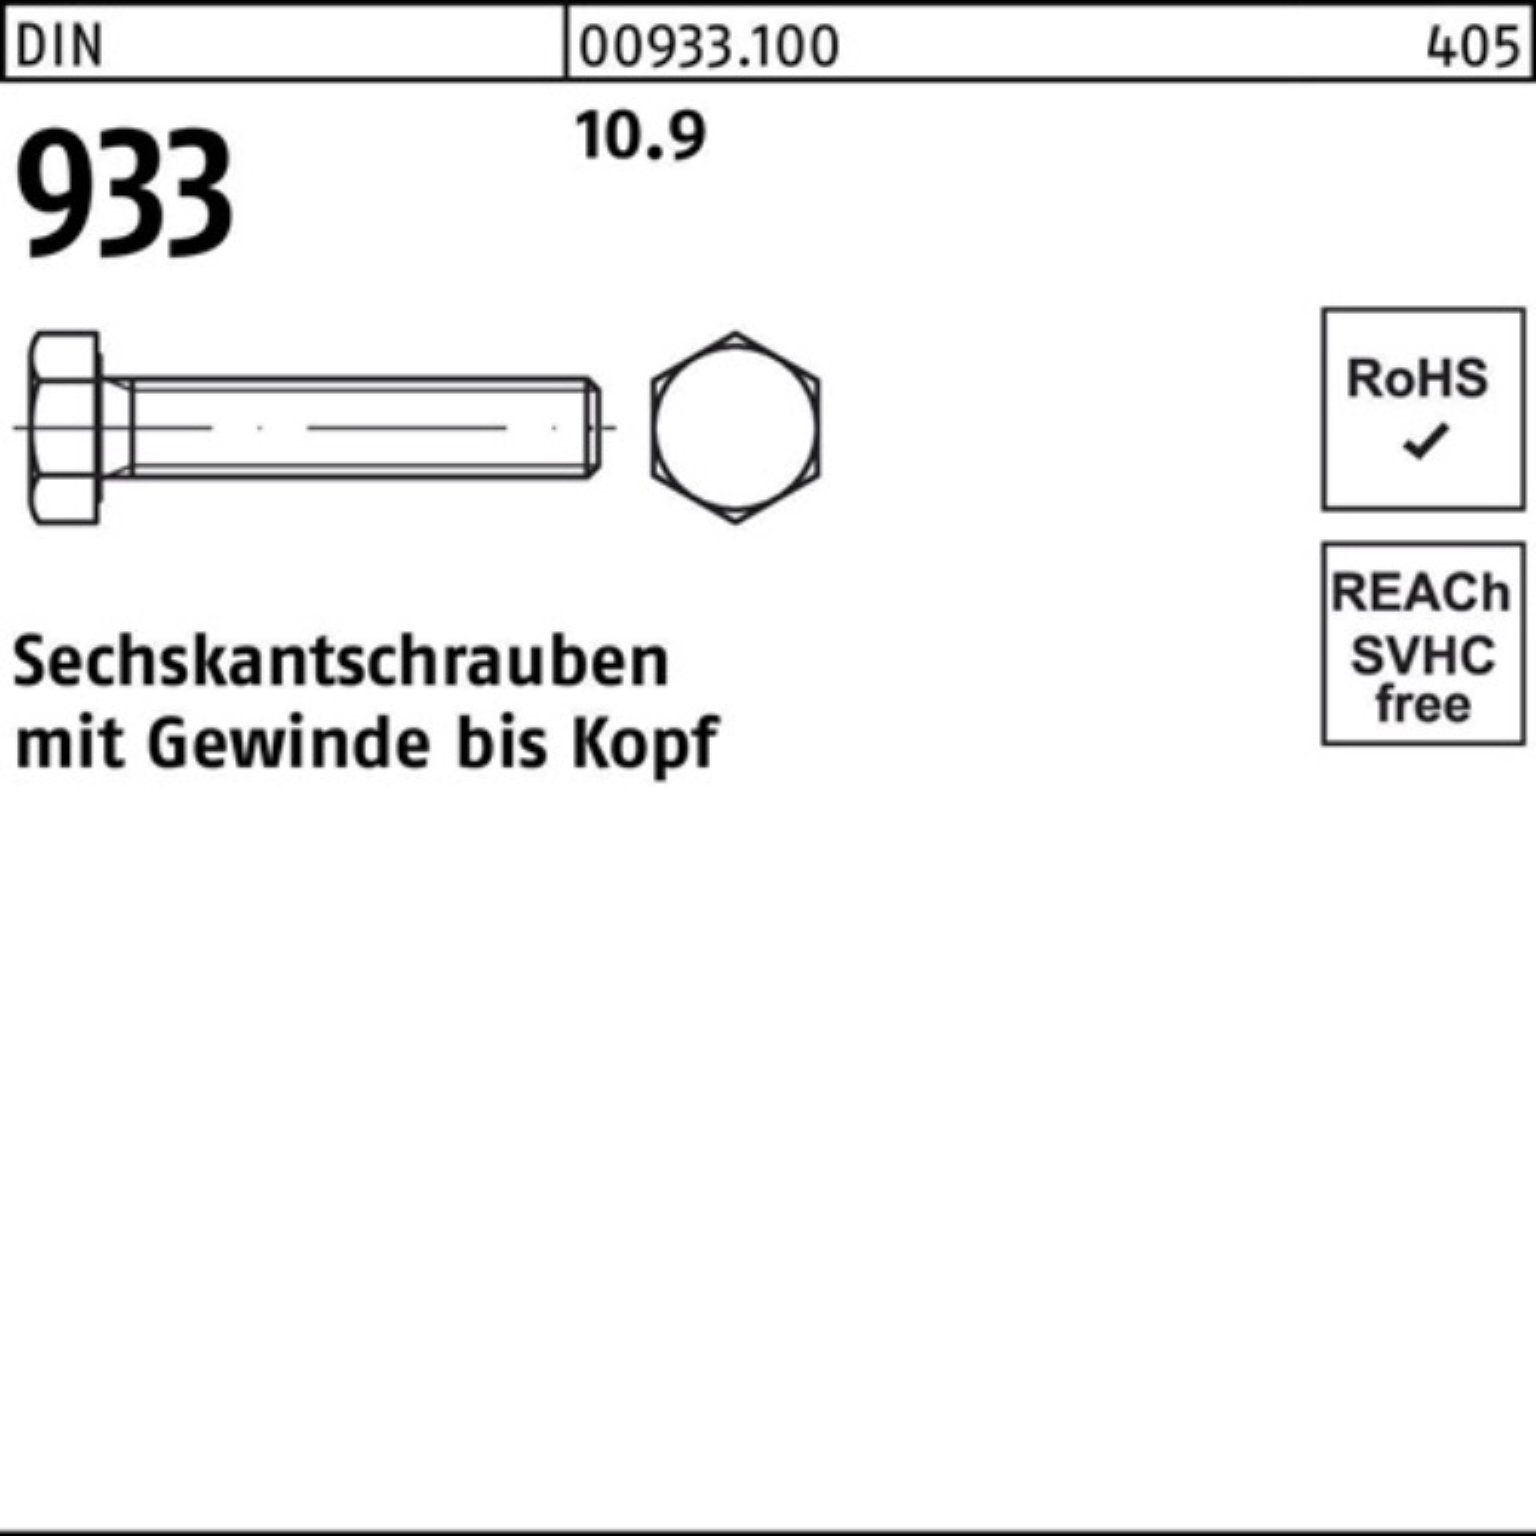 Reyher Stück 933 DIN 65 M8x Sechskantschraube Pack DIN 200er 200 10.9 933 Sechskantschraube VG